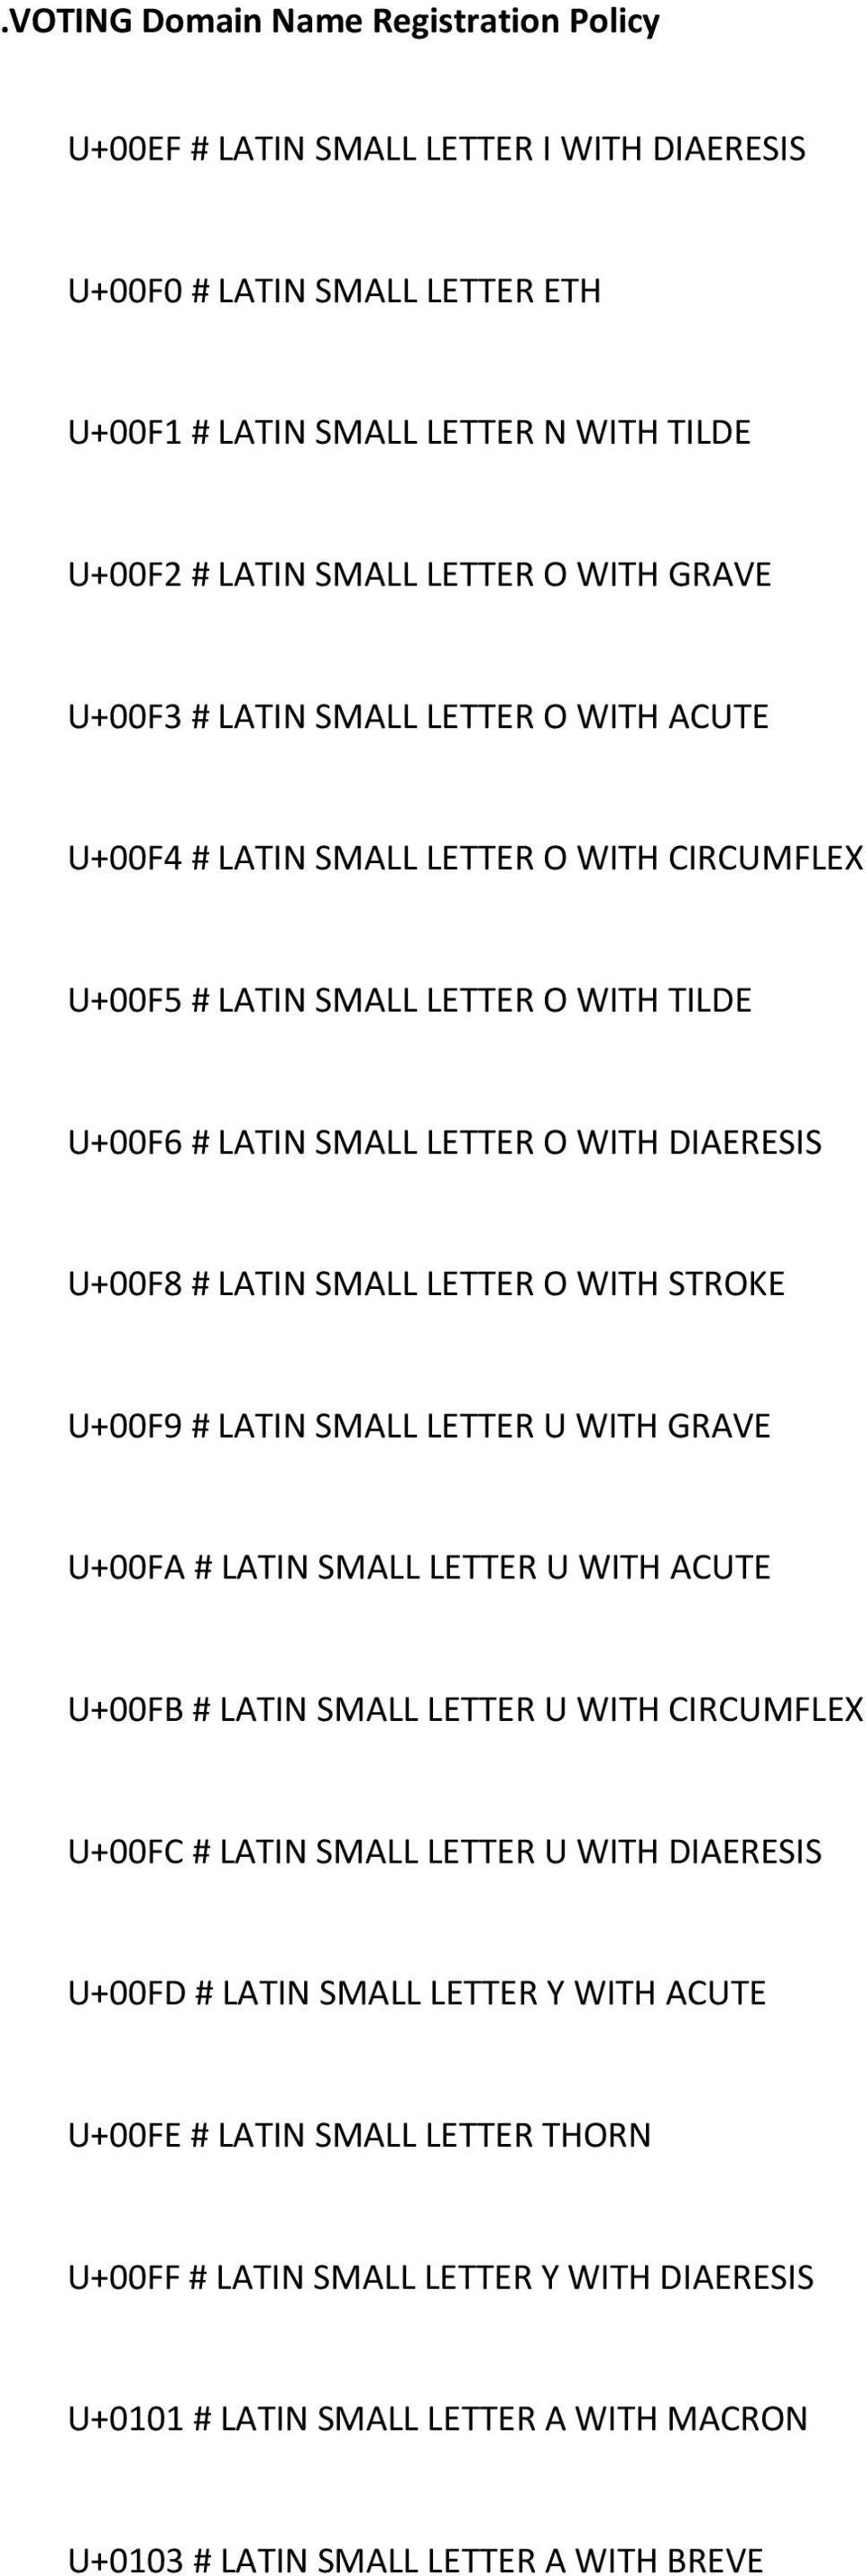 U+00F9 # LATIN SMALL LETTER U WITH GRAVE U+00FA # LATIN SMALL LETTER U WITH ACUTE U+00FB # LATIN SMALL LETTER U WITH CIRCUMFLEX U+00FC # LATIN SMALL LETTER U WITH DIAERESIS U+00FD # LATIN